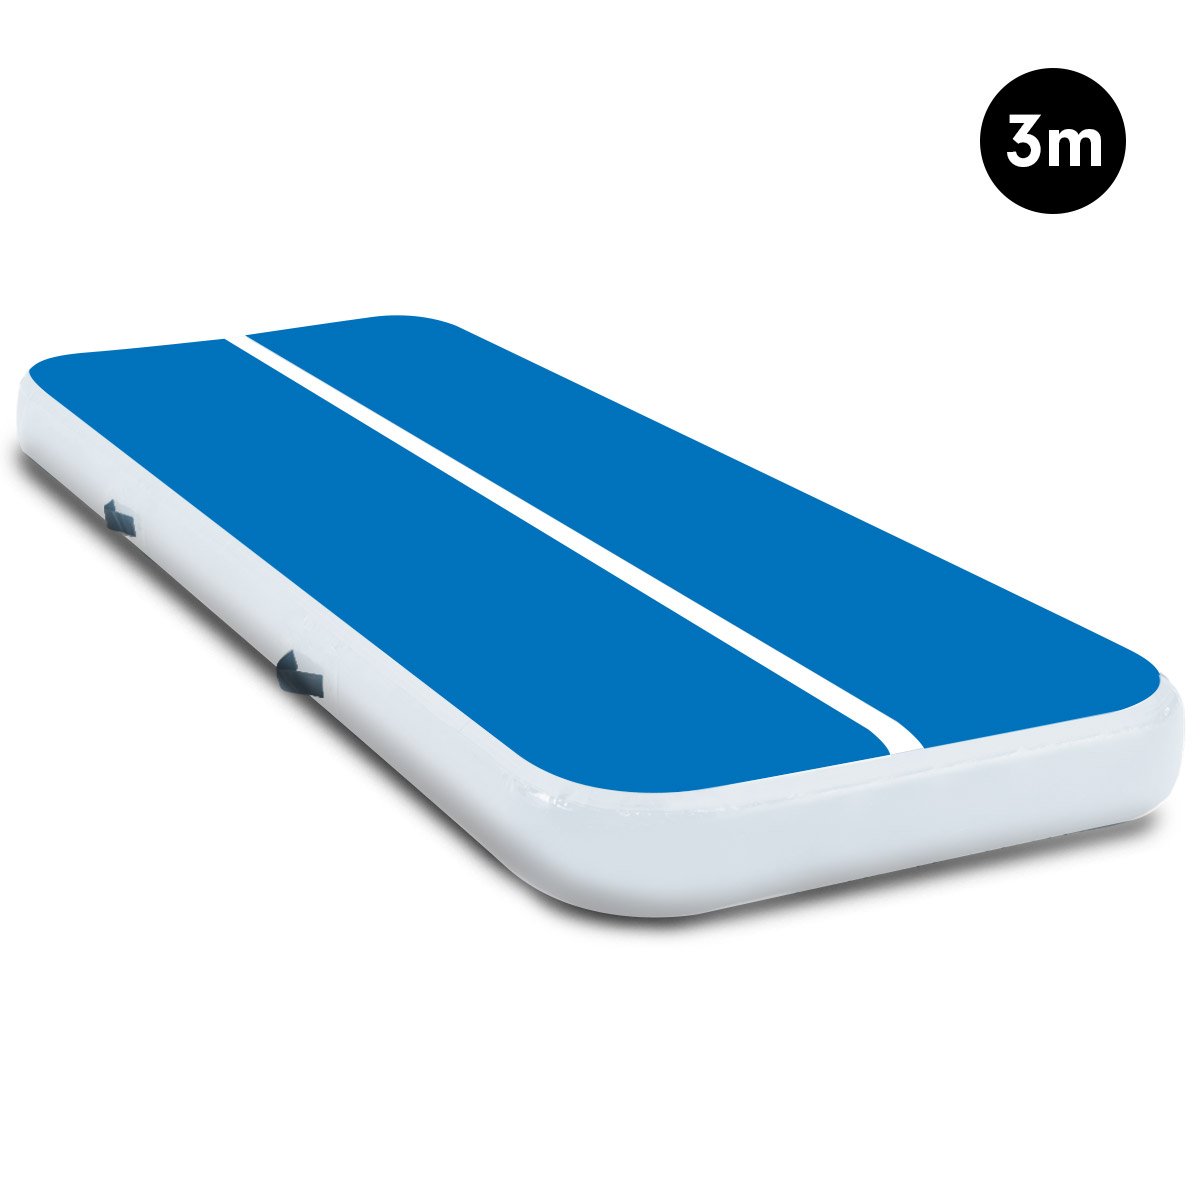 3m x 1m Air Track Inflatable Tumbling Gymnastics Mat - Blue White 2